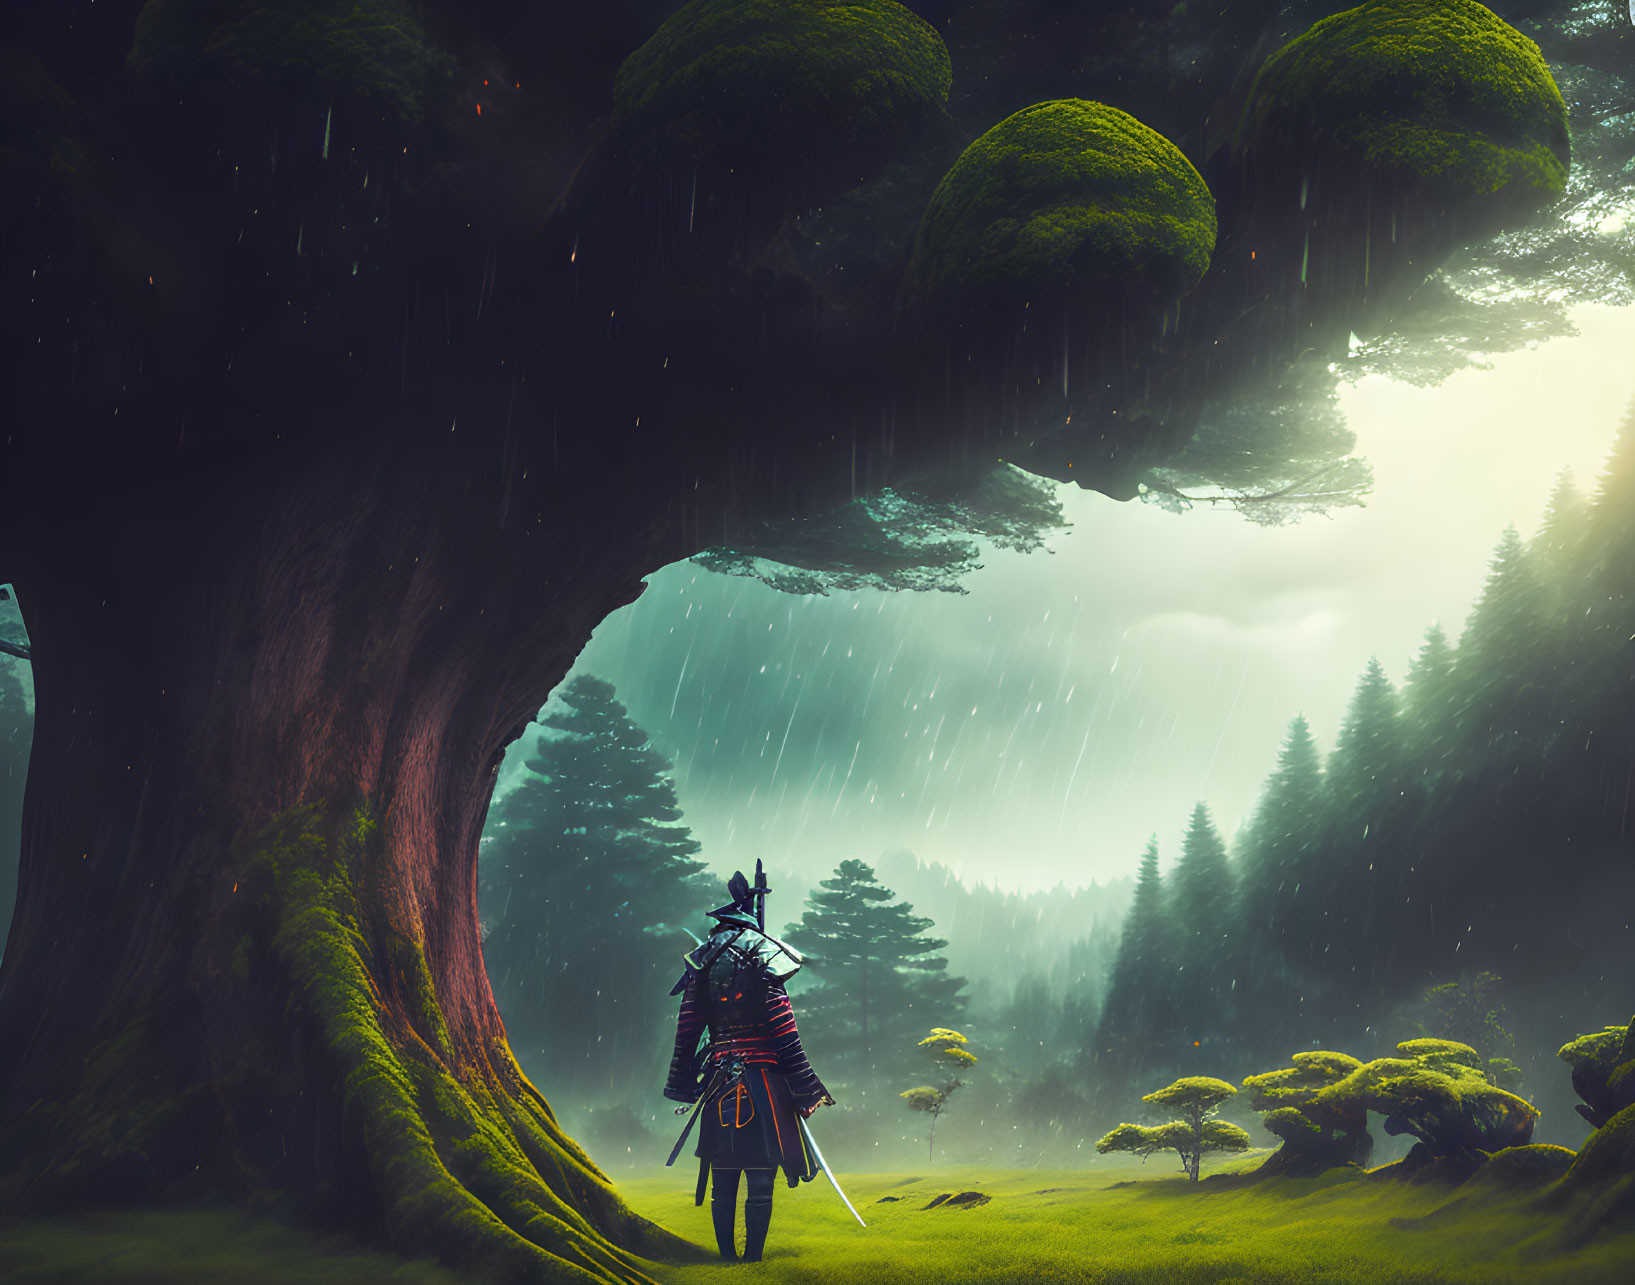 Samurai beneath ancient tree in mystical rainforest